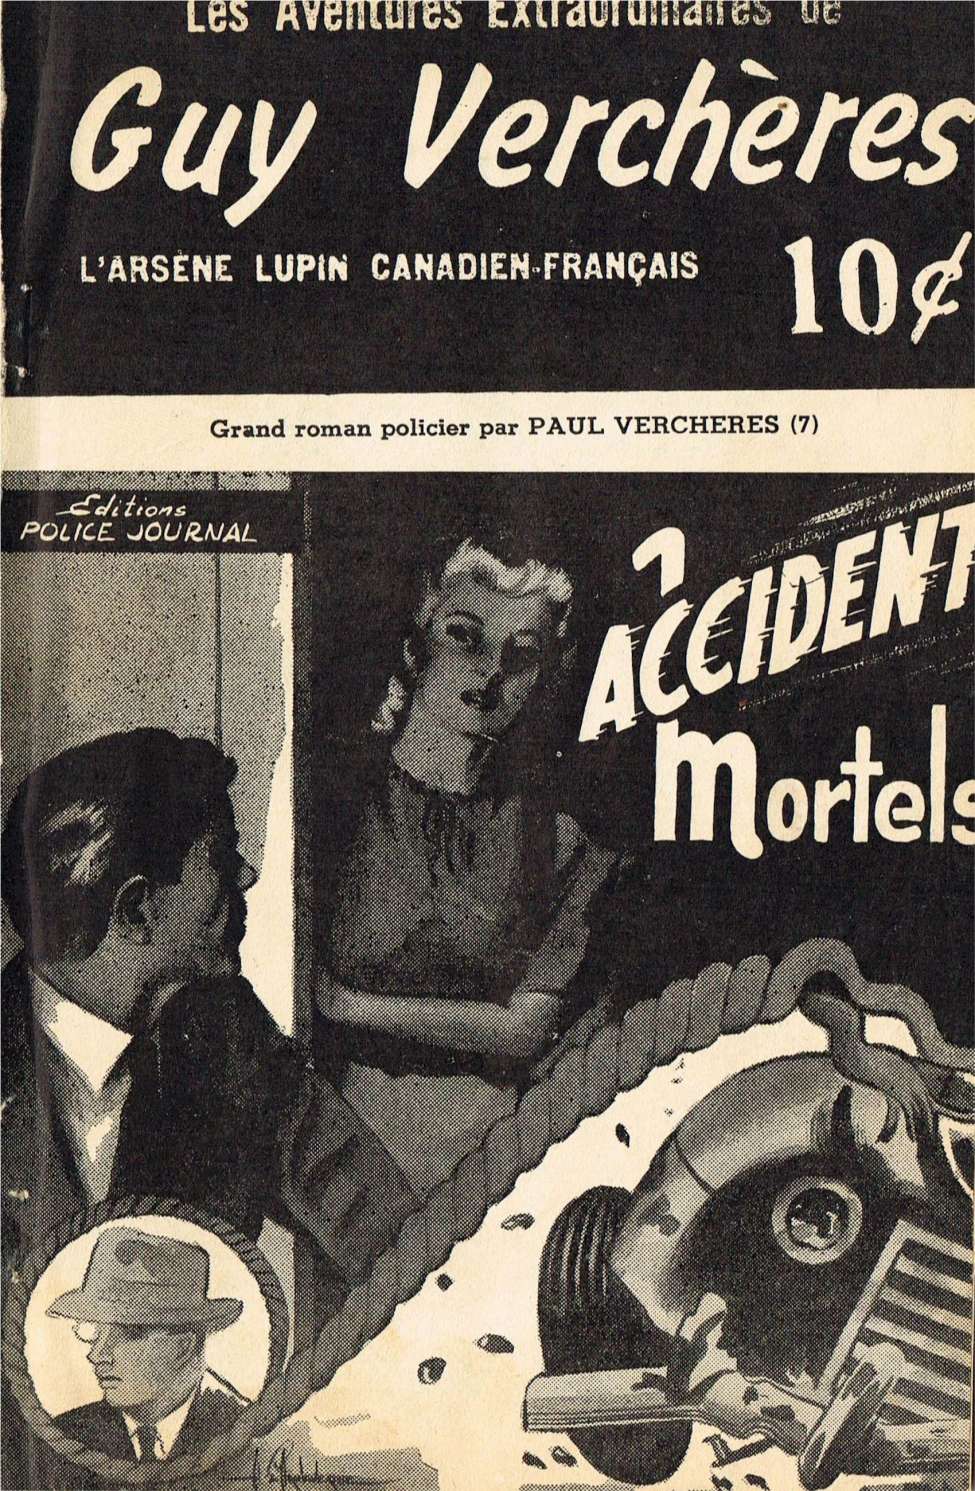 Comic Book Cover For Guy-Vercheres v2 7 - Accidents mortels